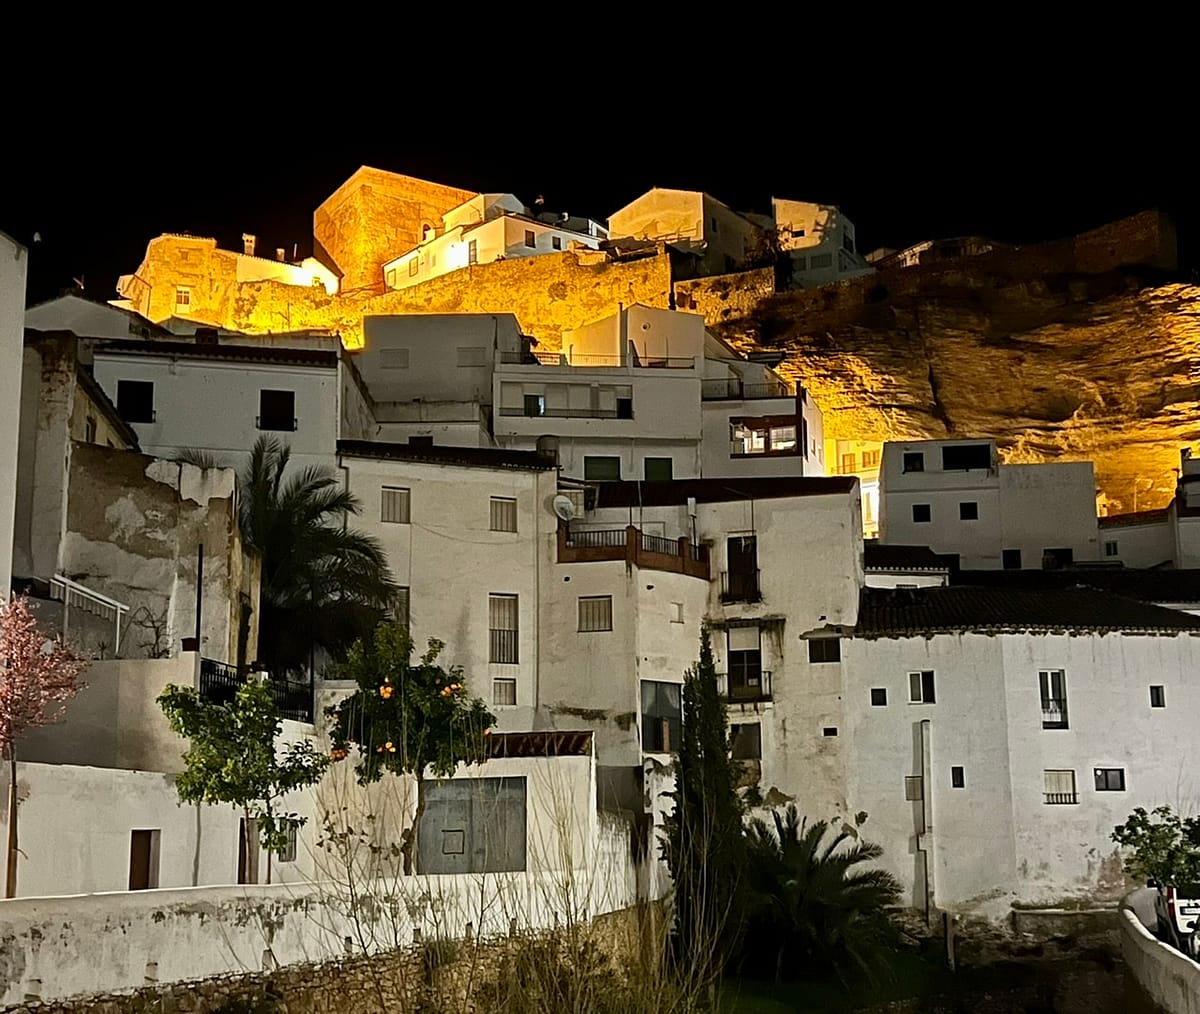 The remains of a 12th century Moorish castle overlooks the Andalusian White Village of Setenil de las Bodegas